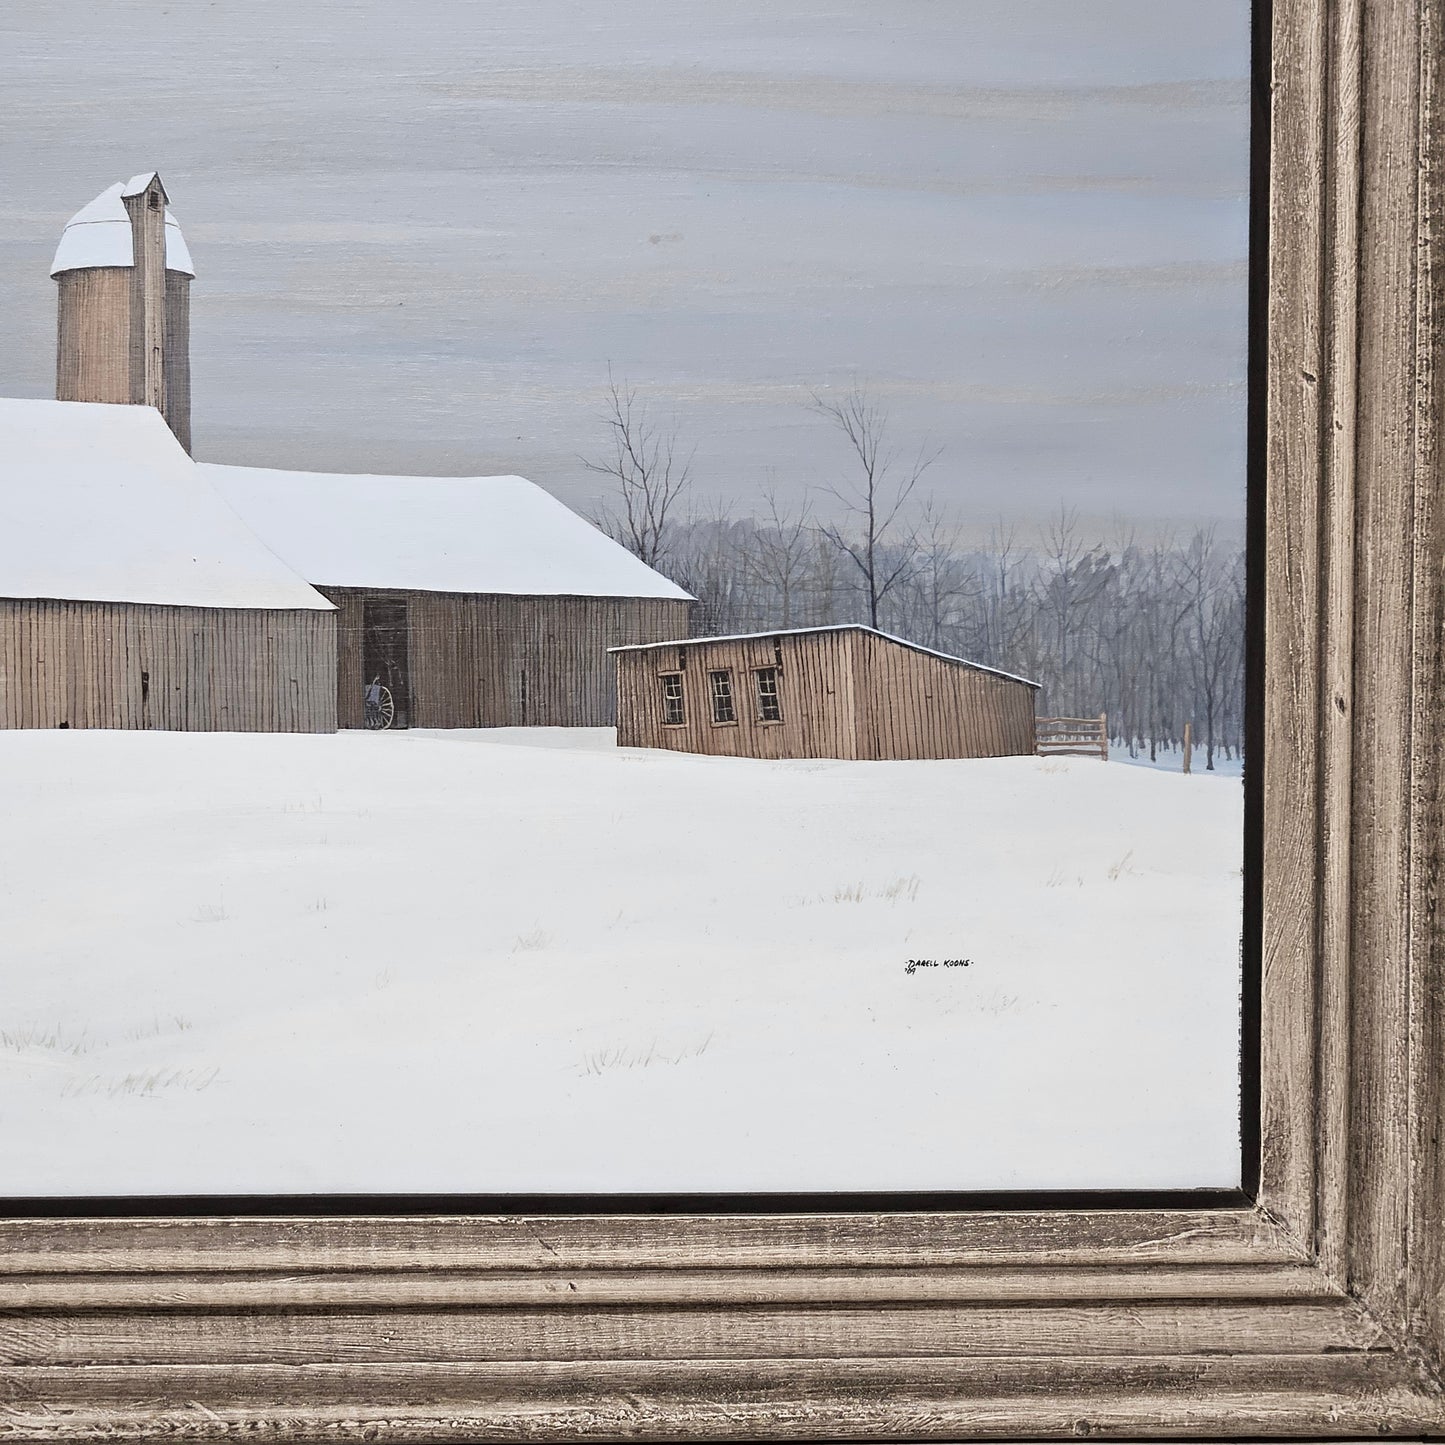 Vintage Darell Koons Acrylic on Panel Painting " Winter Farm Near Three Rivers, Mich"